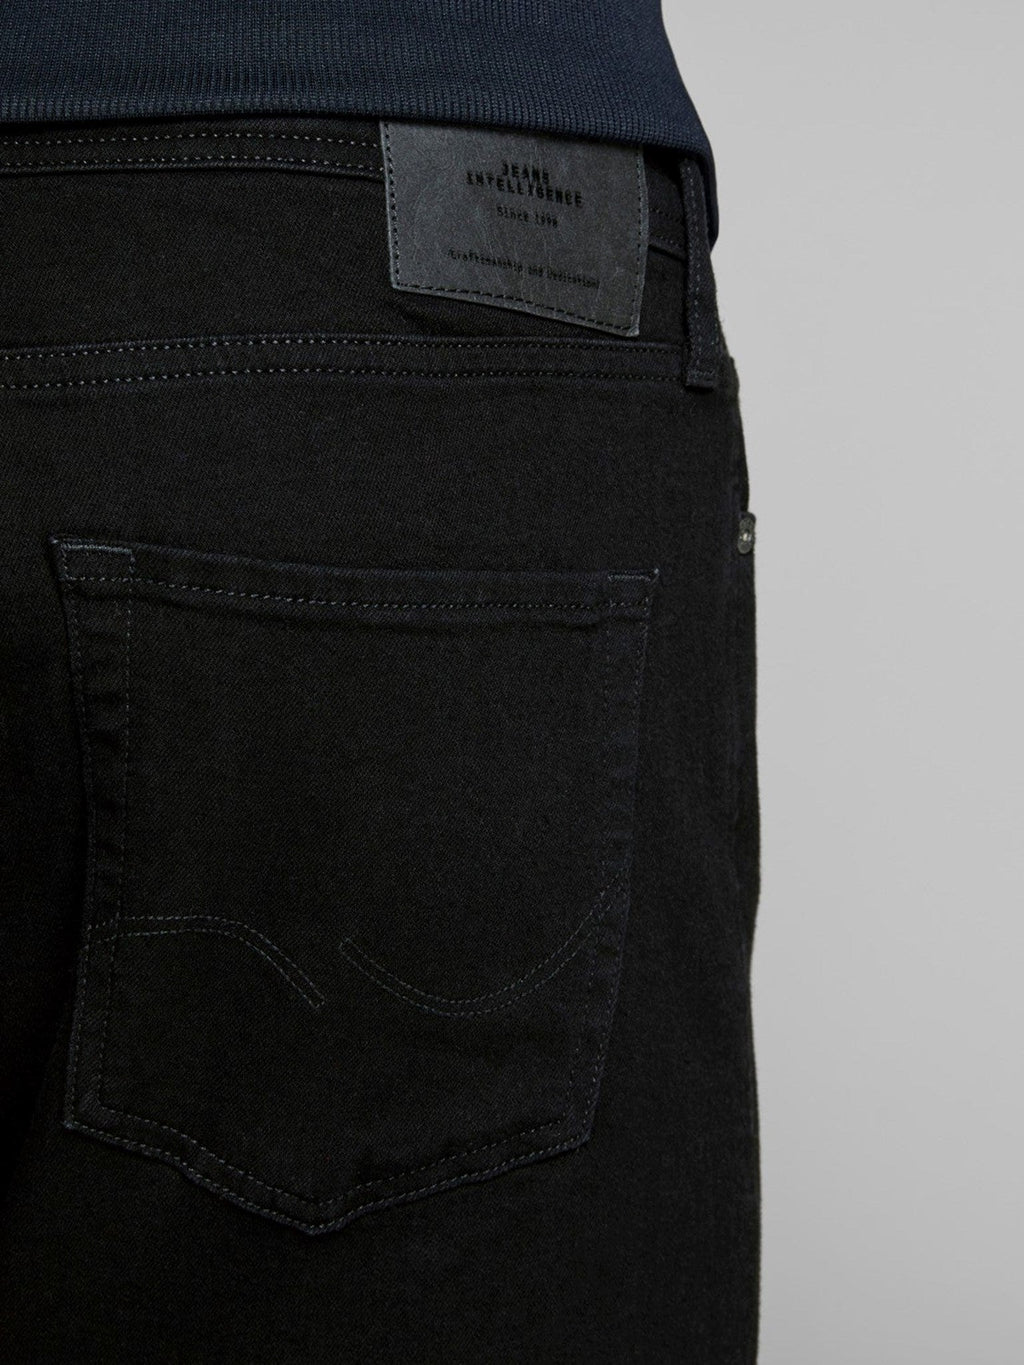 Jeans original Mike - Denim noir